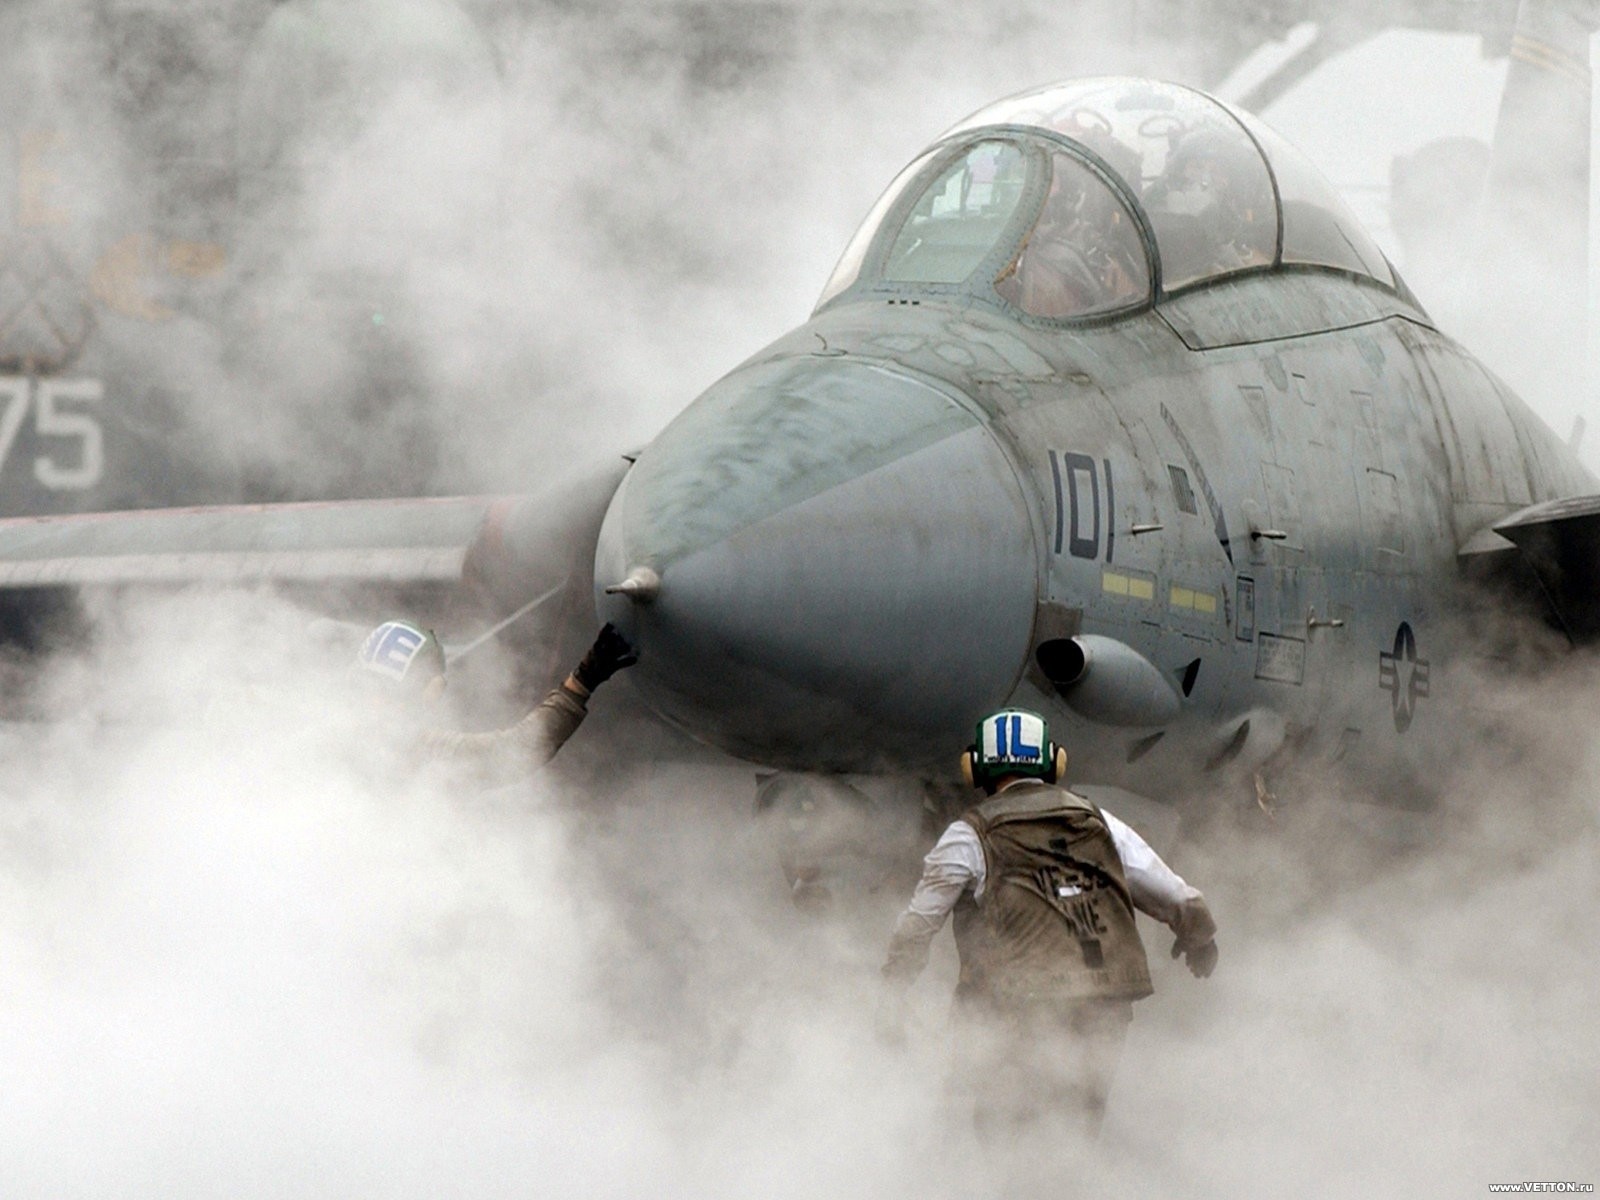 General 1600x1200 aircraft smoke military aircraft F-14 Tomcat vehicle military American aircraft